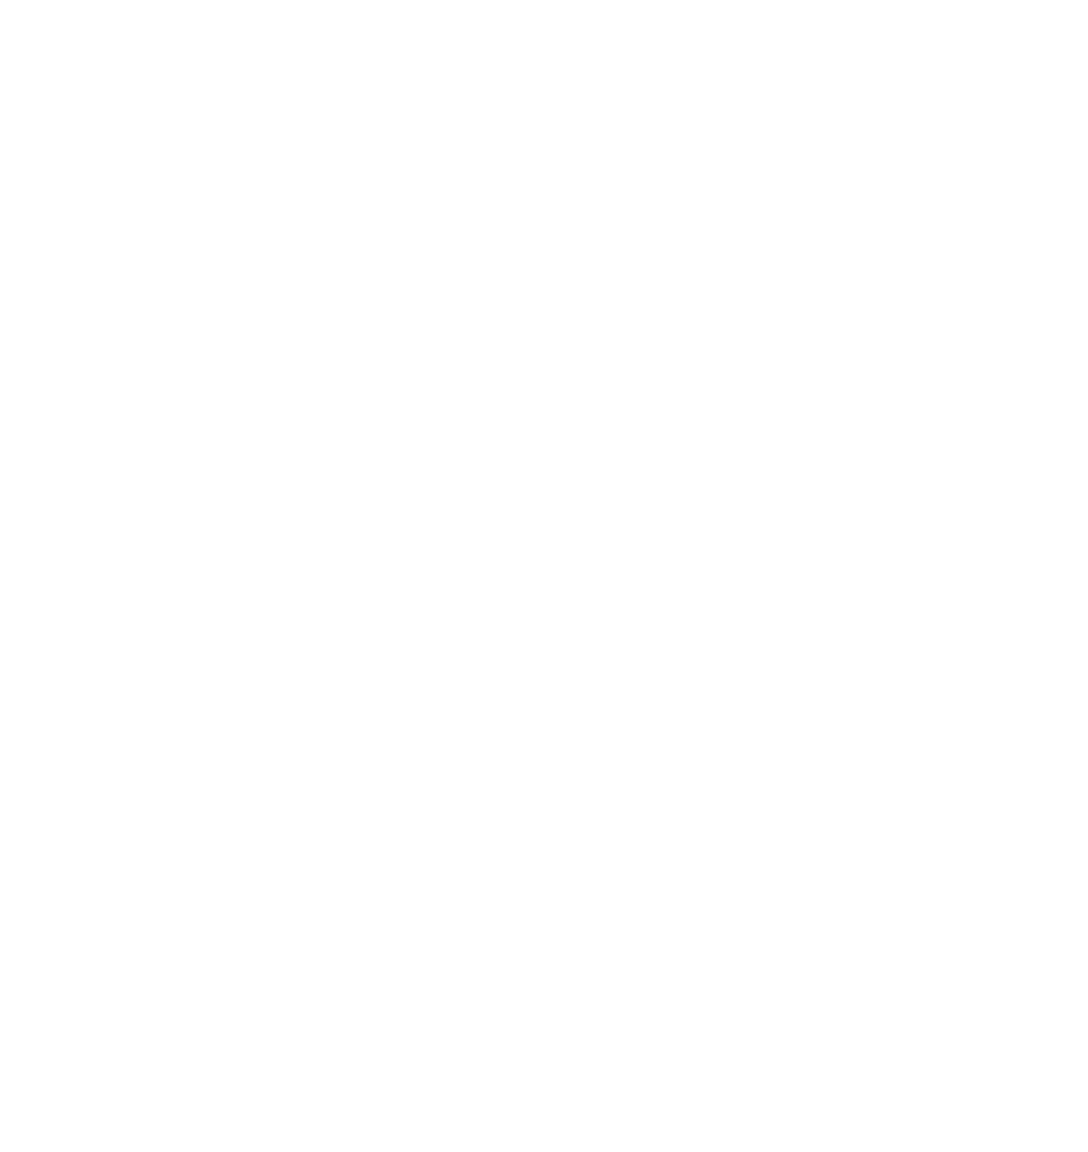 CASA For Kids Serving Kenton, Campbell & Pendleton Counties